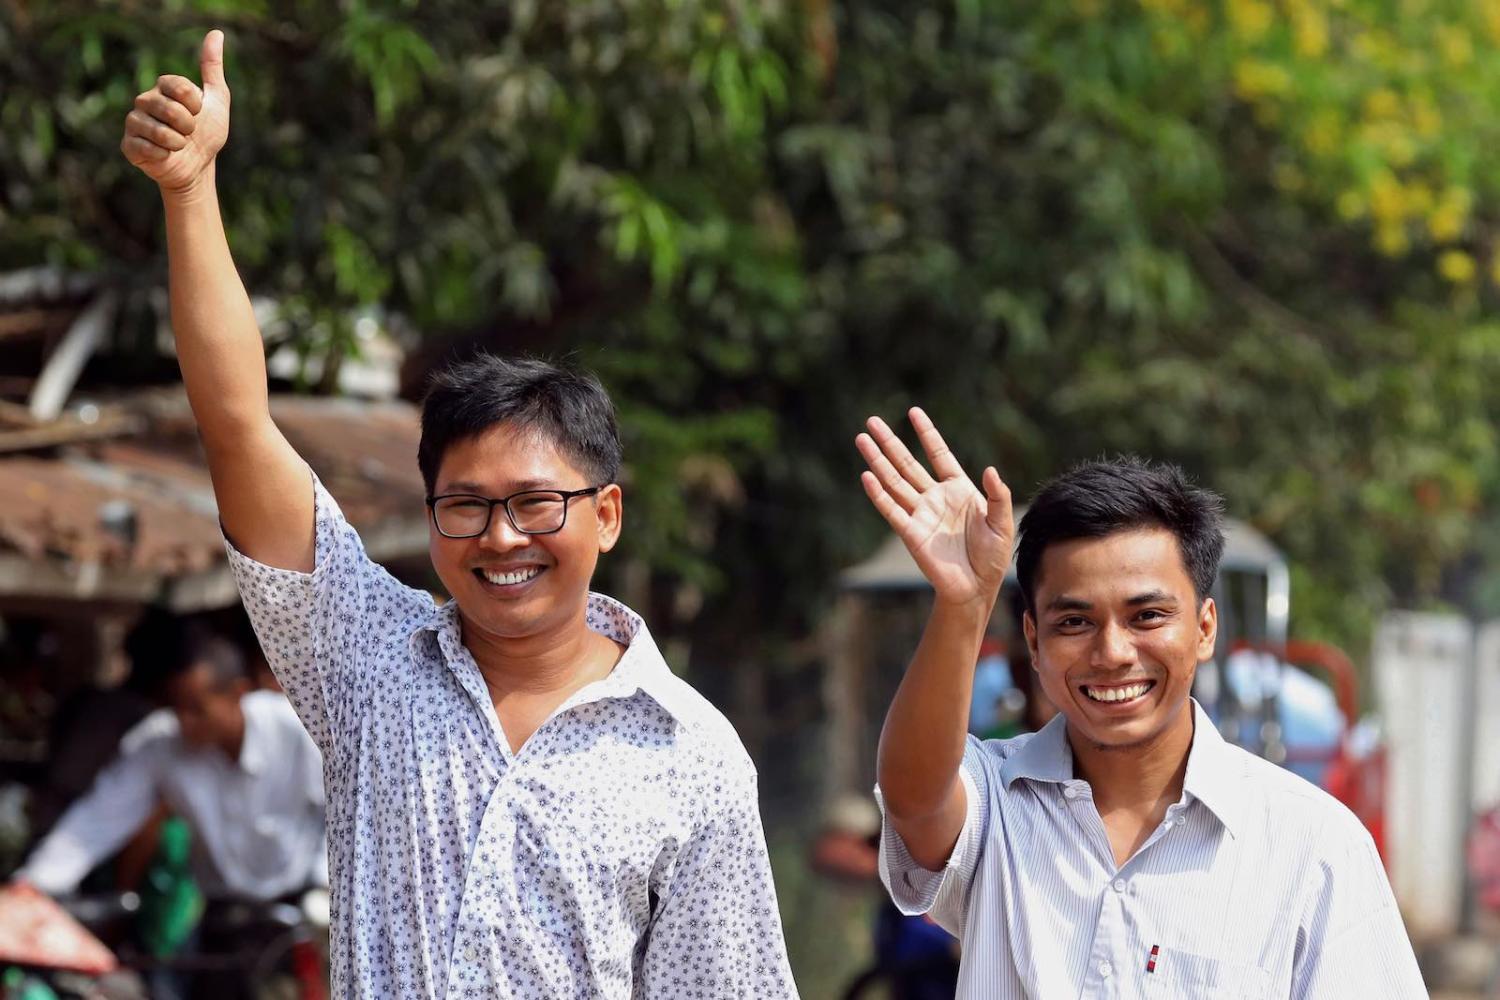 Reuters journalists Wa Lone and Kyaw Soe Oo walk free from Insein prison (Photo: Ann Wang via Getty)